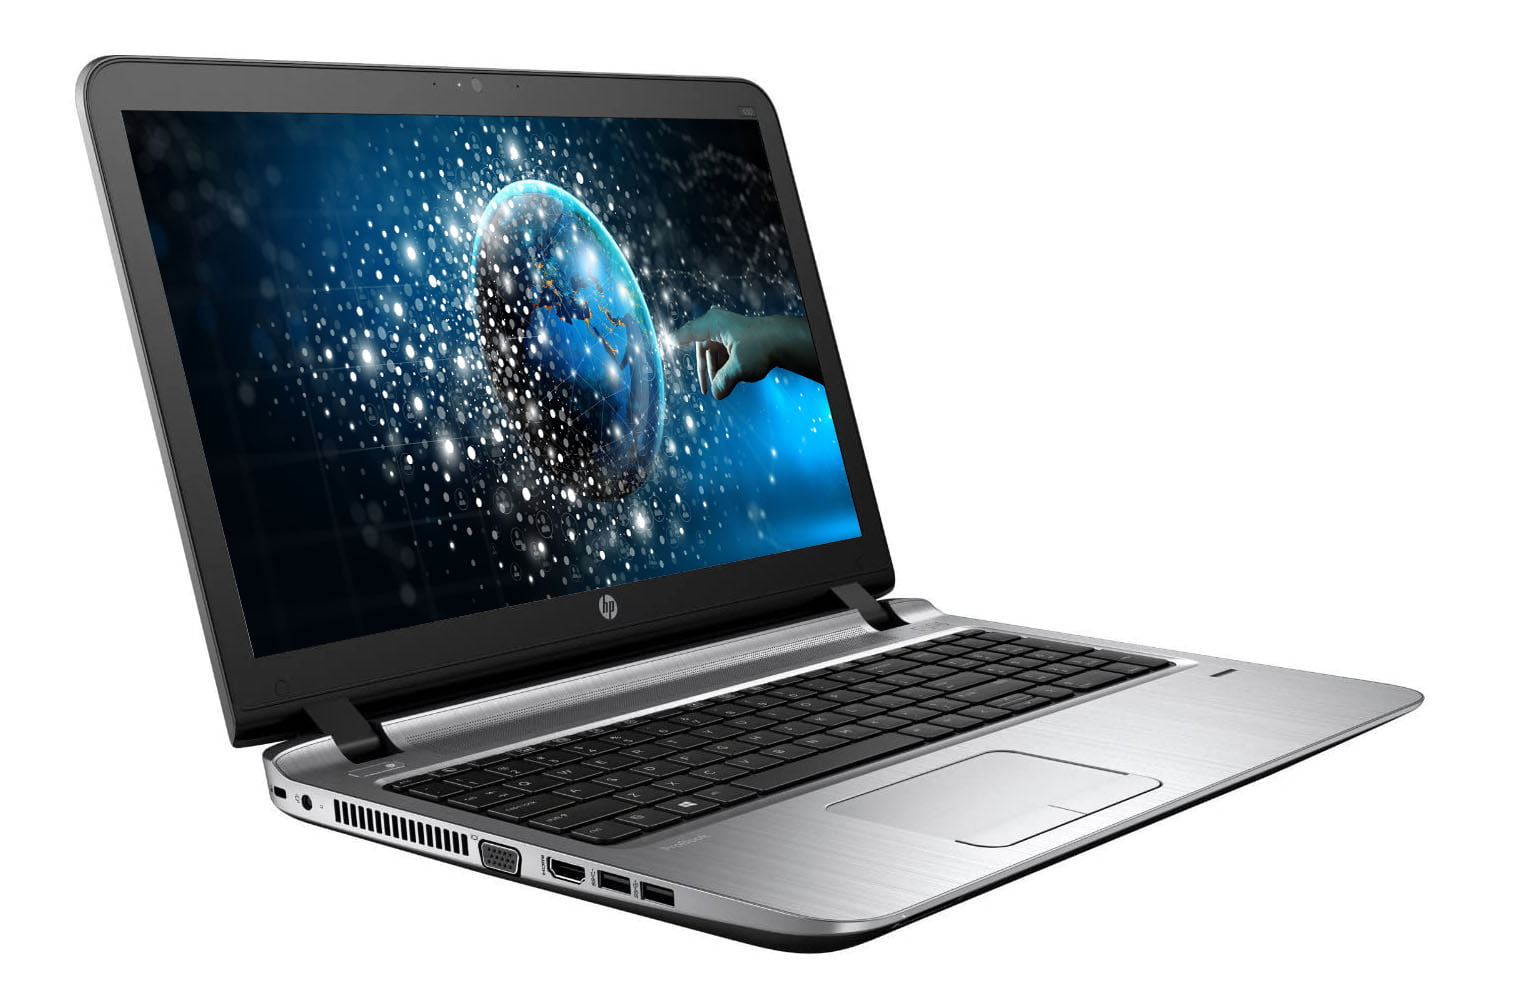 HP ProBook 450 G3 Laptop Notebook with Intel Core i5-6200u 2.3Ghz